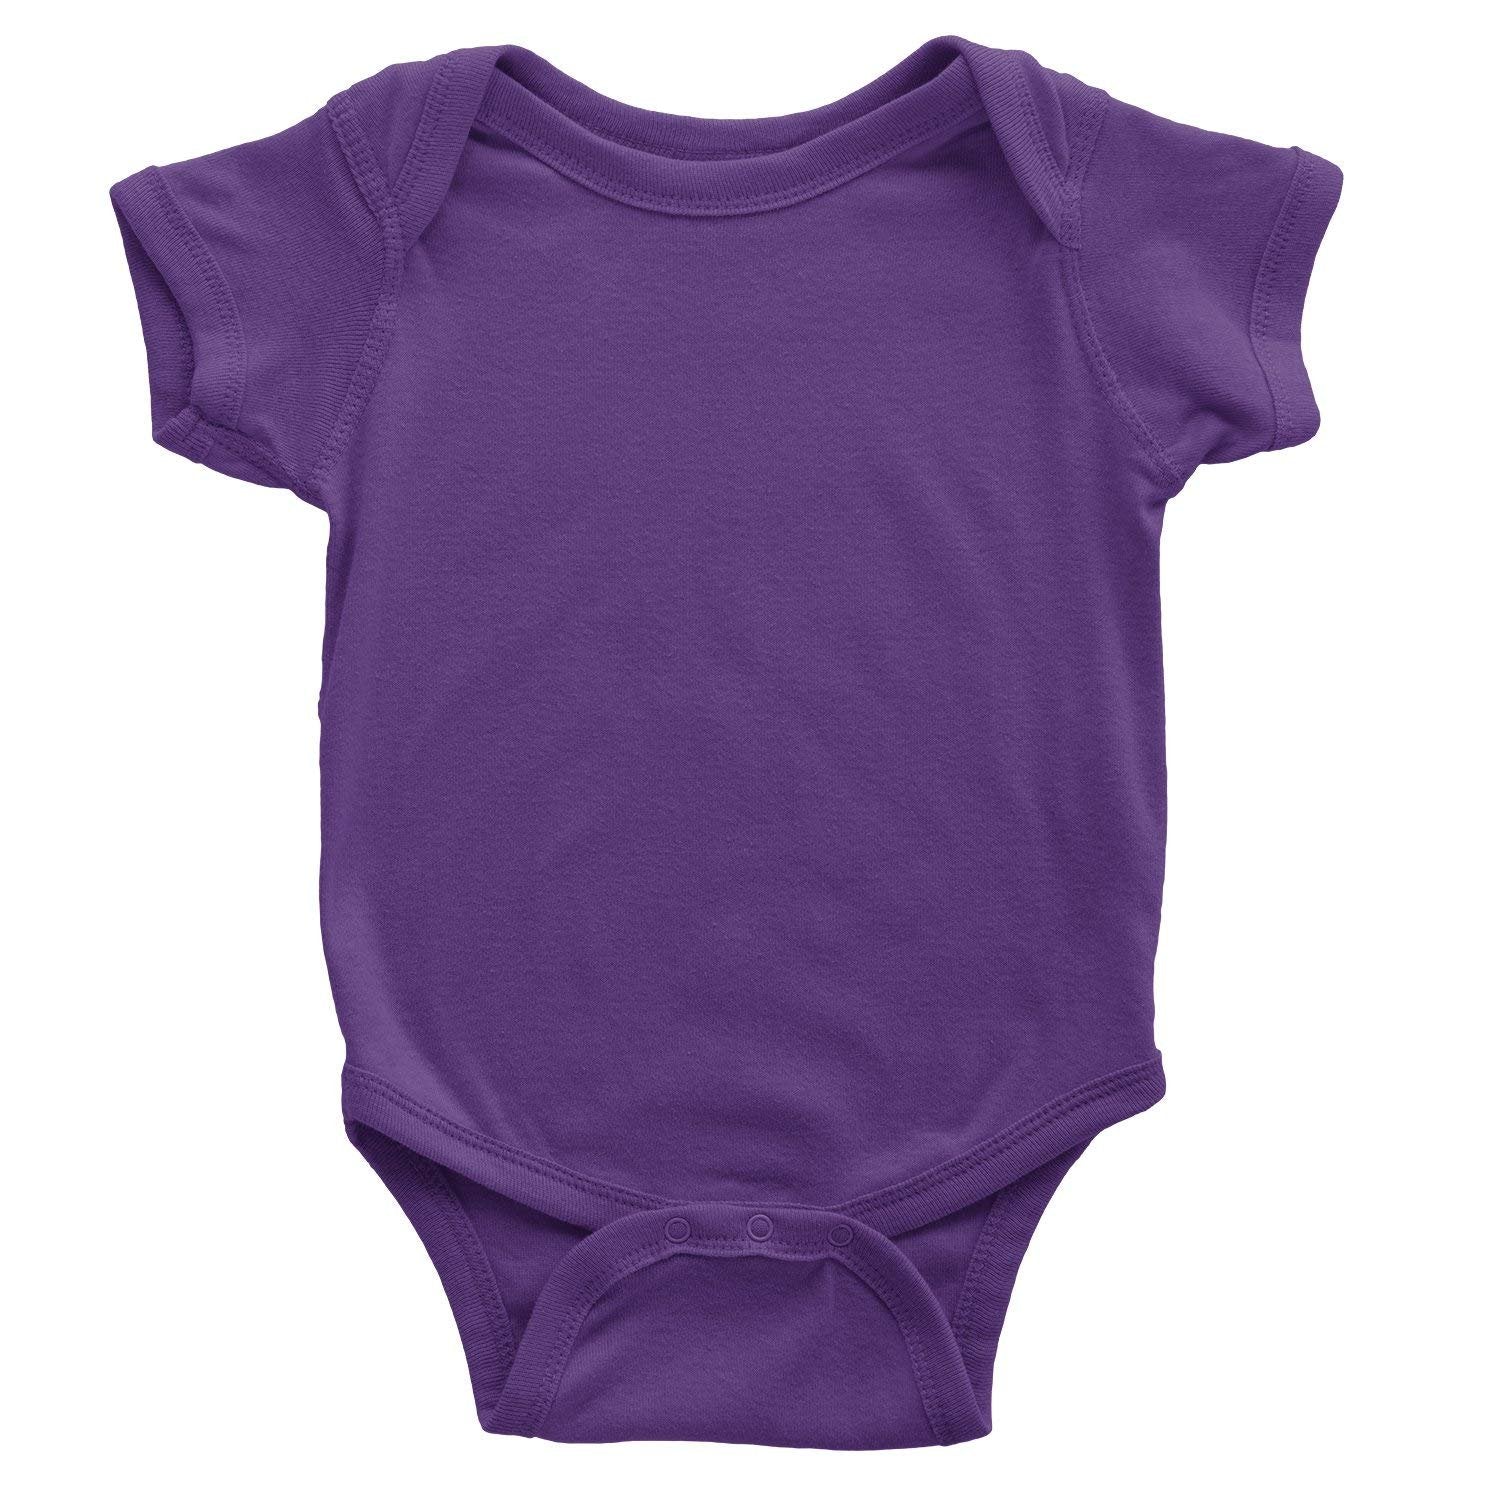 Tulo & Garn Plain Baby Bodysuit Soft 100% Cotton Snapsuit